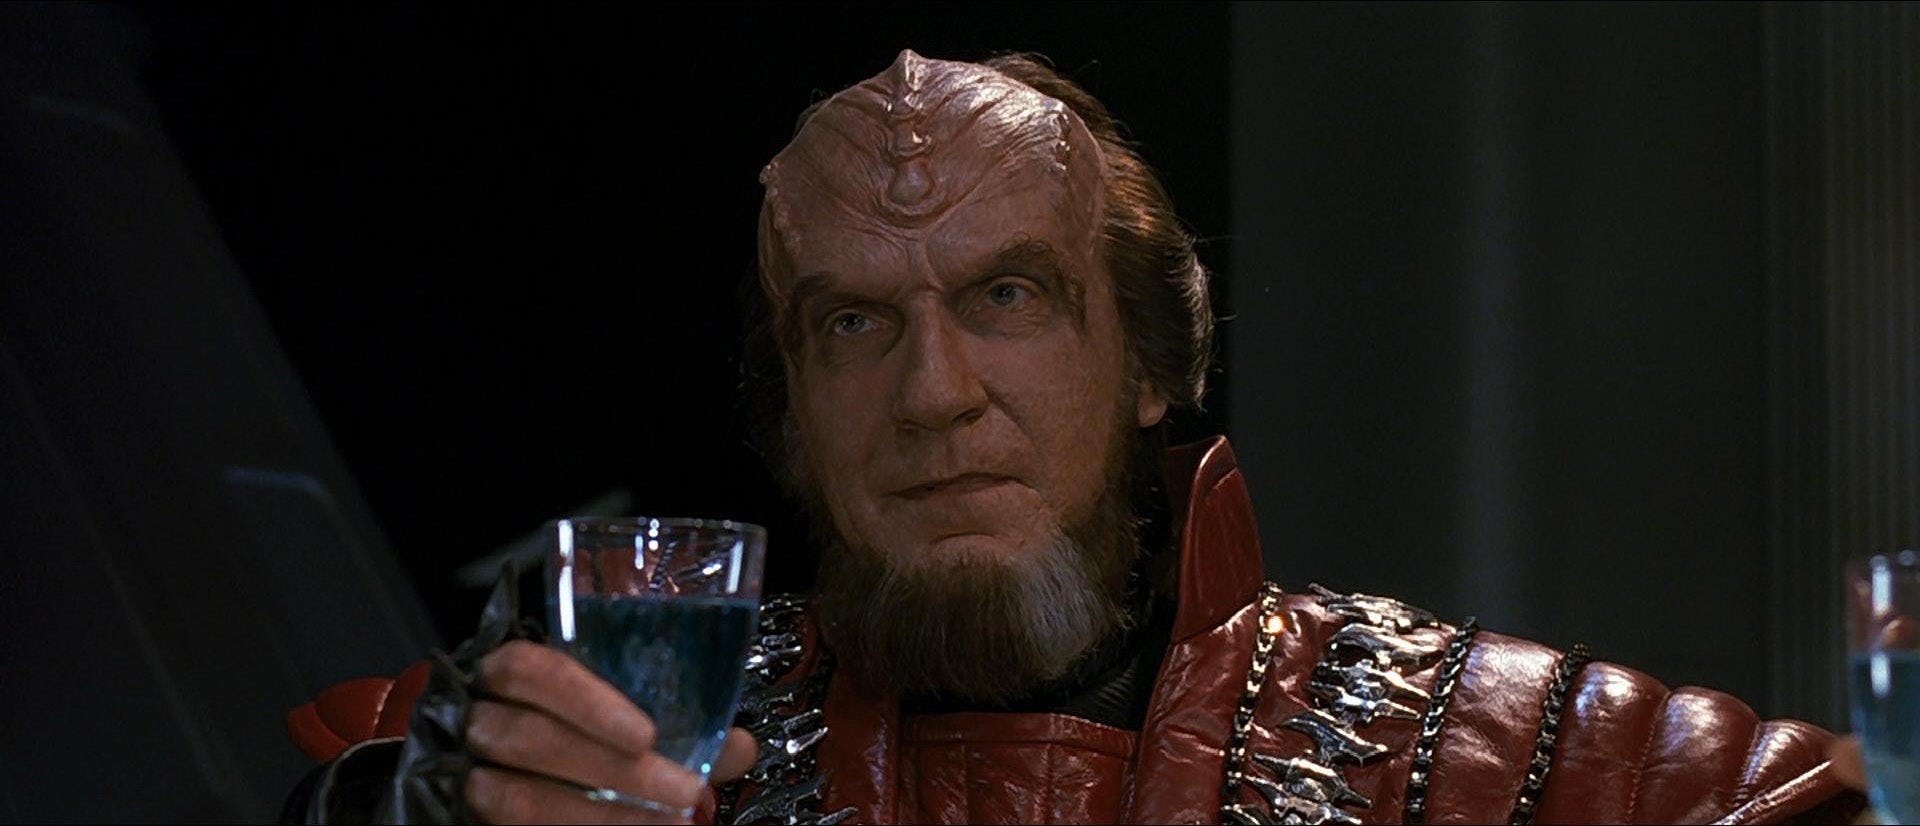 Chancellor Gorkon offers a toast.